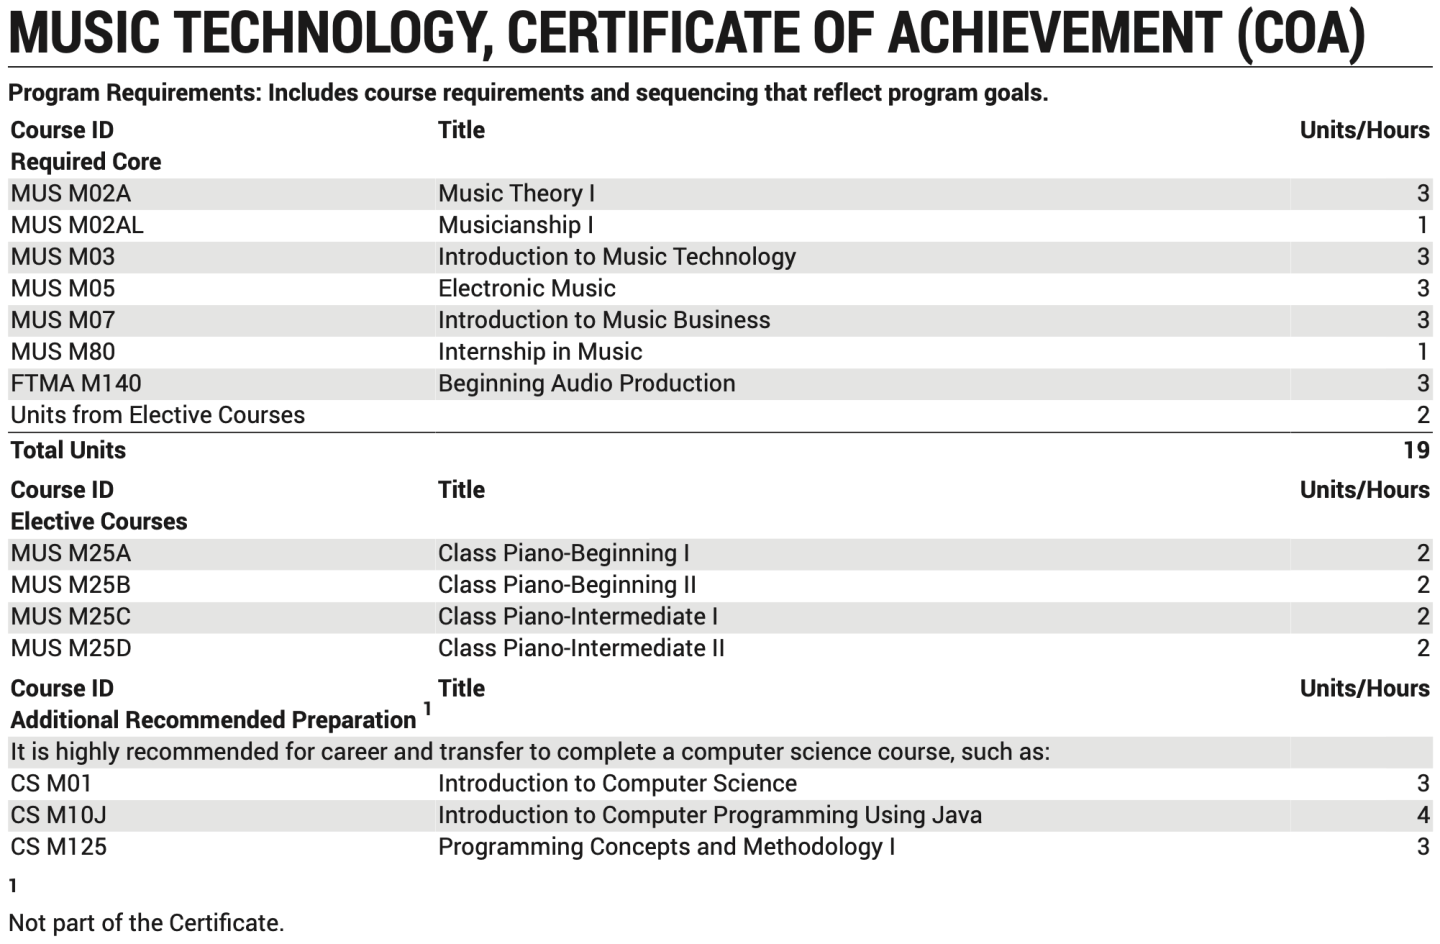 Music Technology Certificate of Achievement